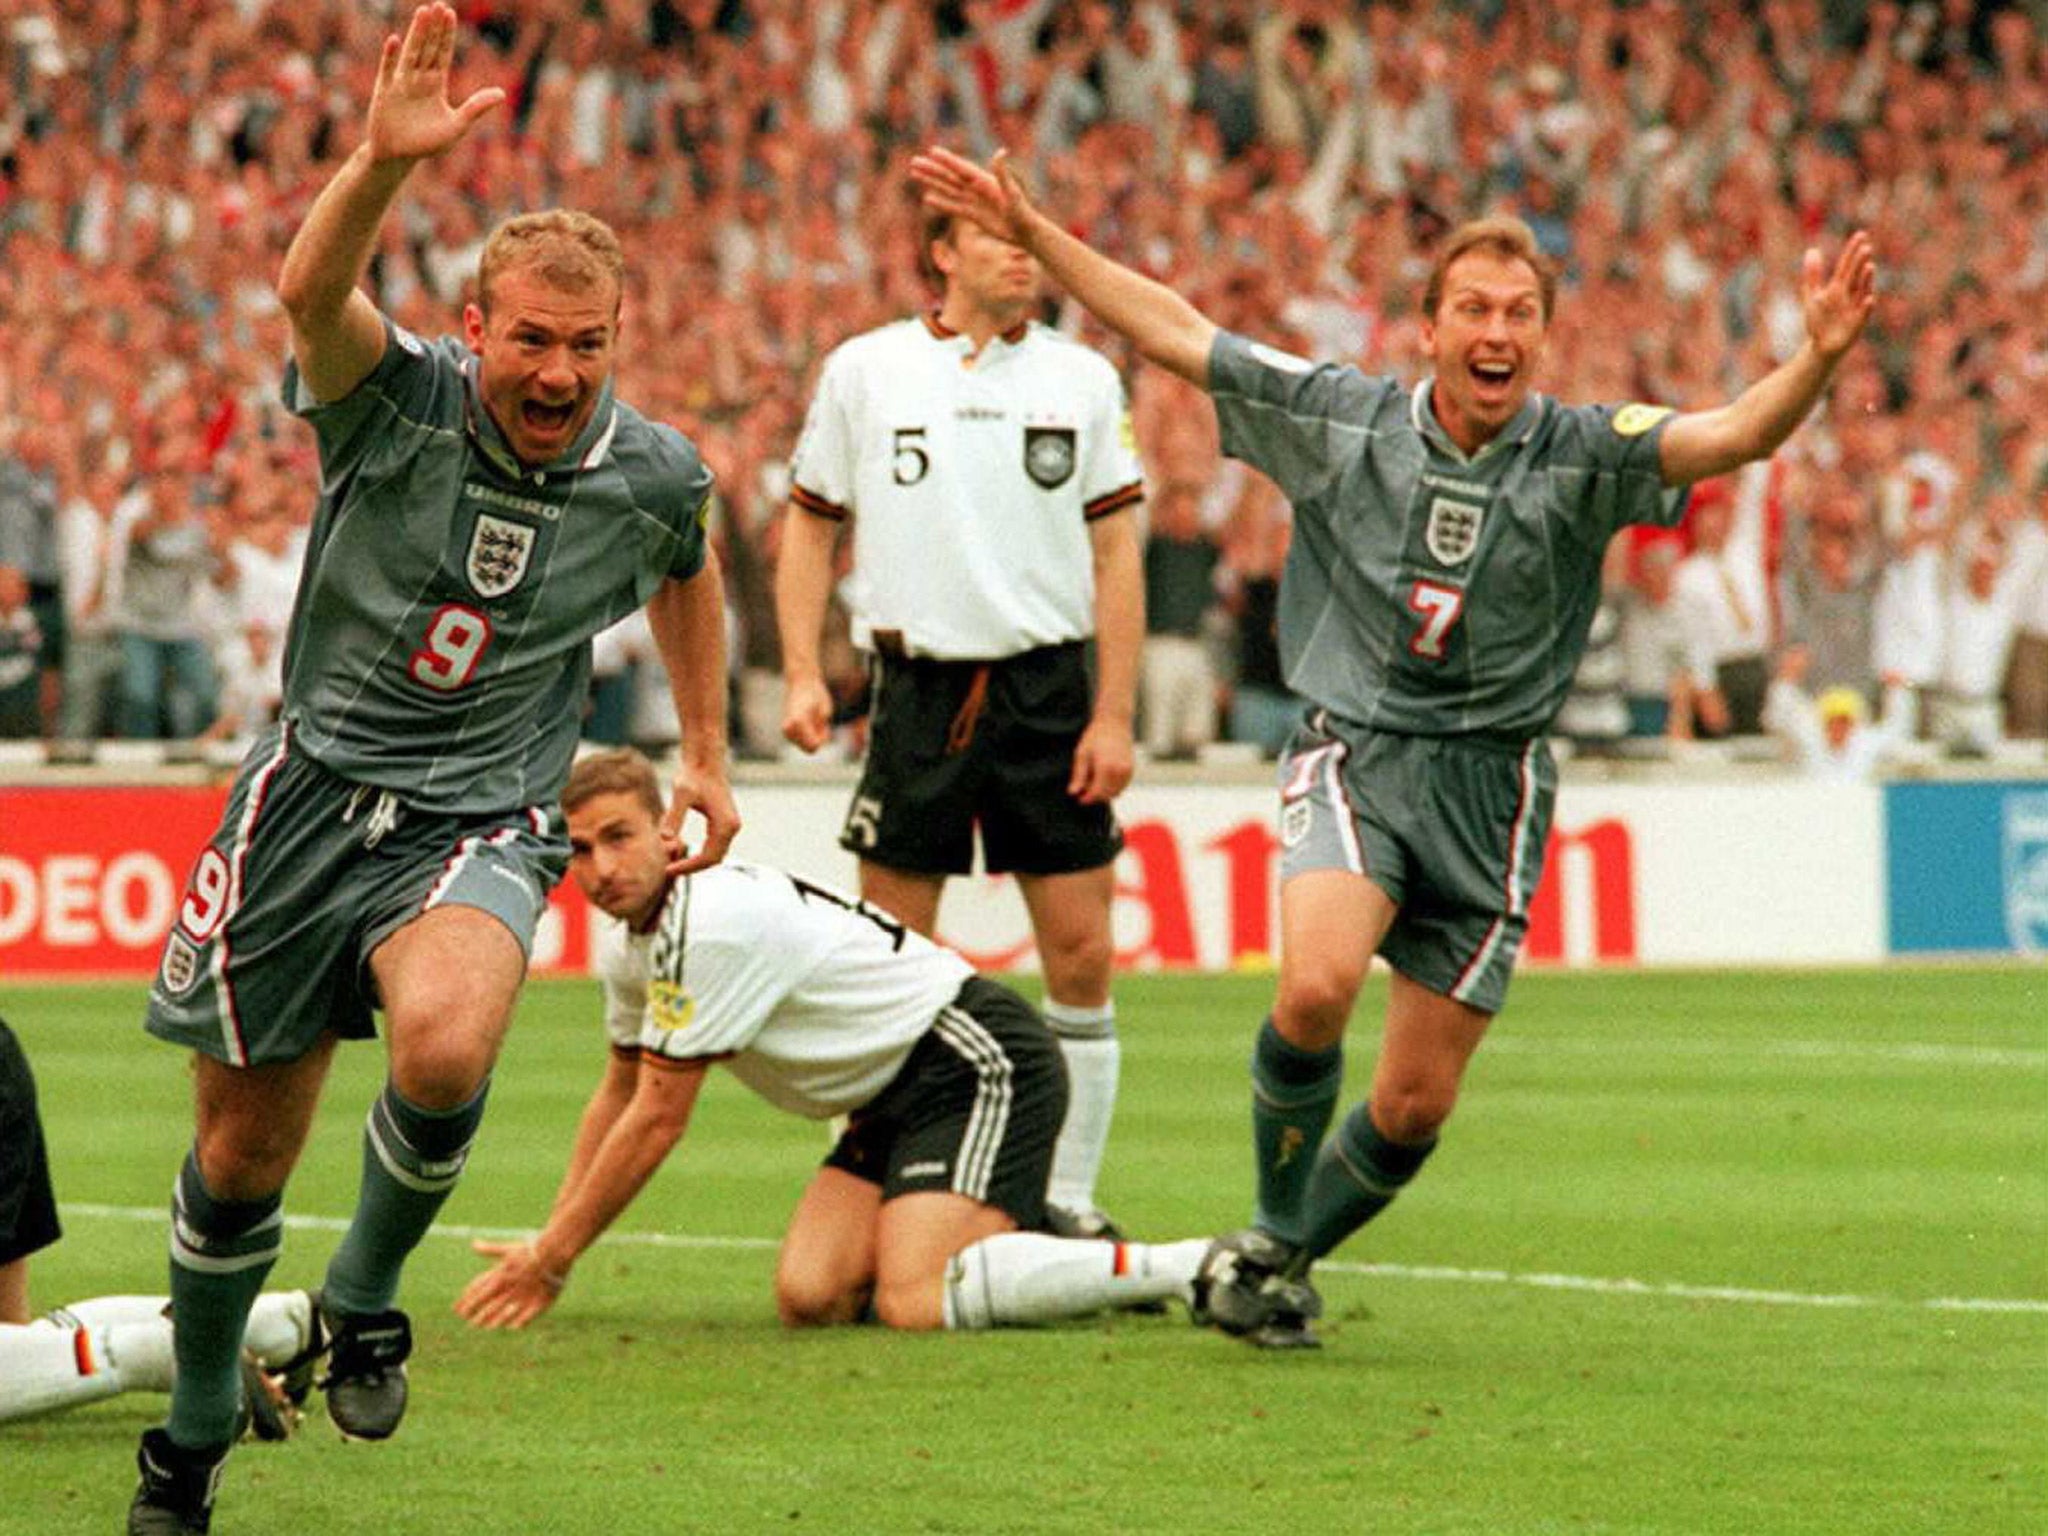 Alan Shearer peels away to celebrate scoring the first goal in the Euro 96 semi-final